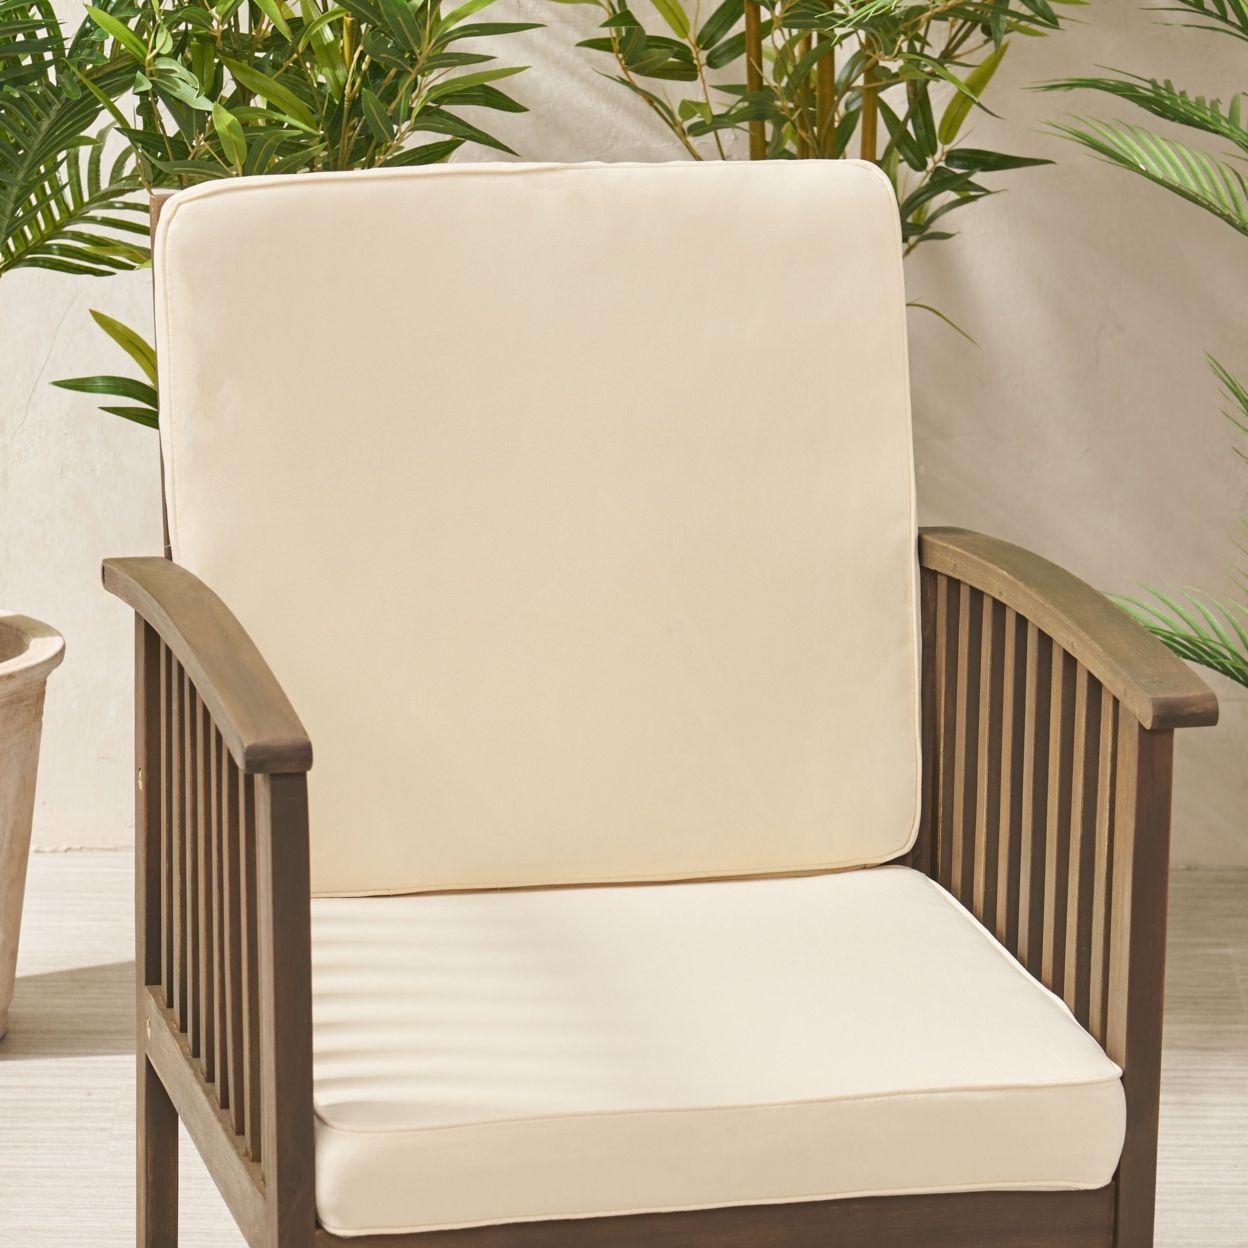 Eydan Outdoor Water Resistant Fabric Club Chair Cushions - Navy Blue